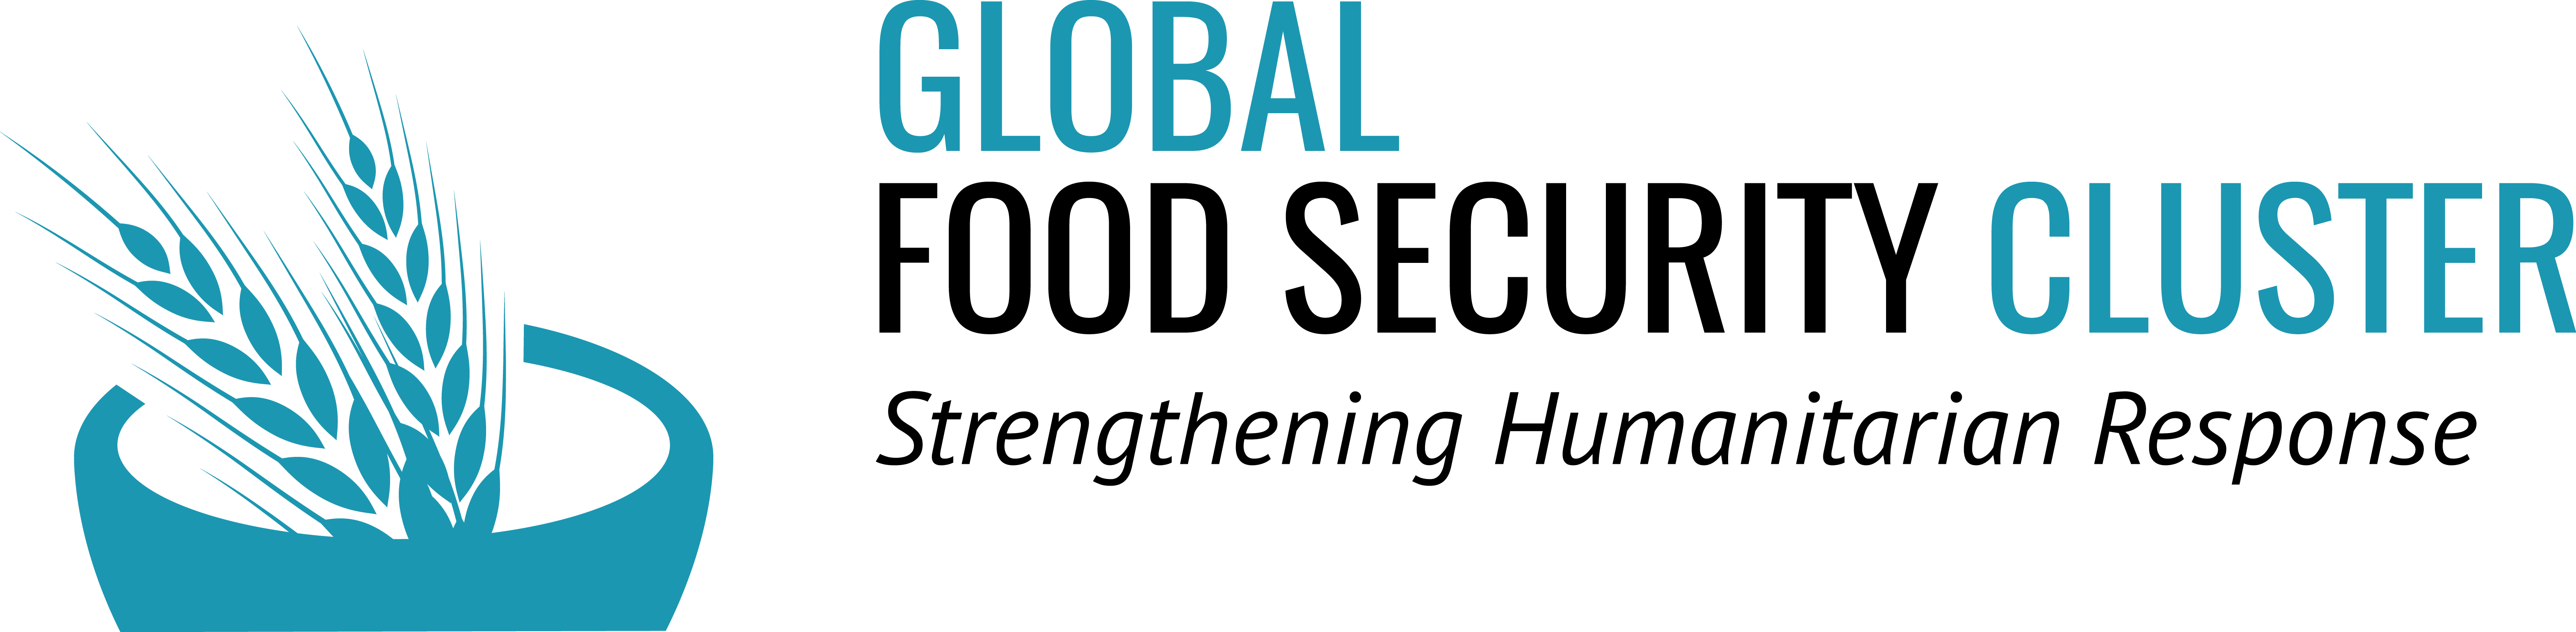 Global Food Security Cluster Logo PNG image